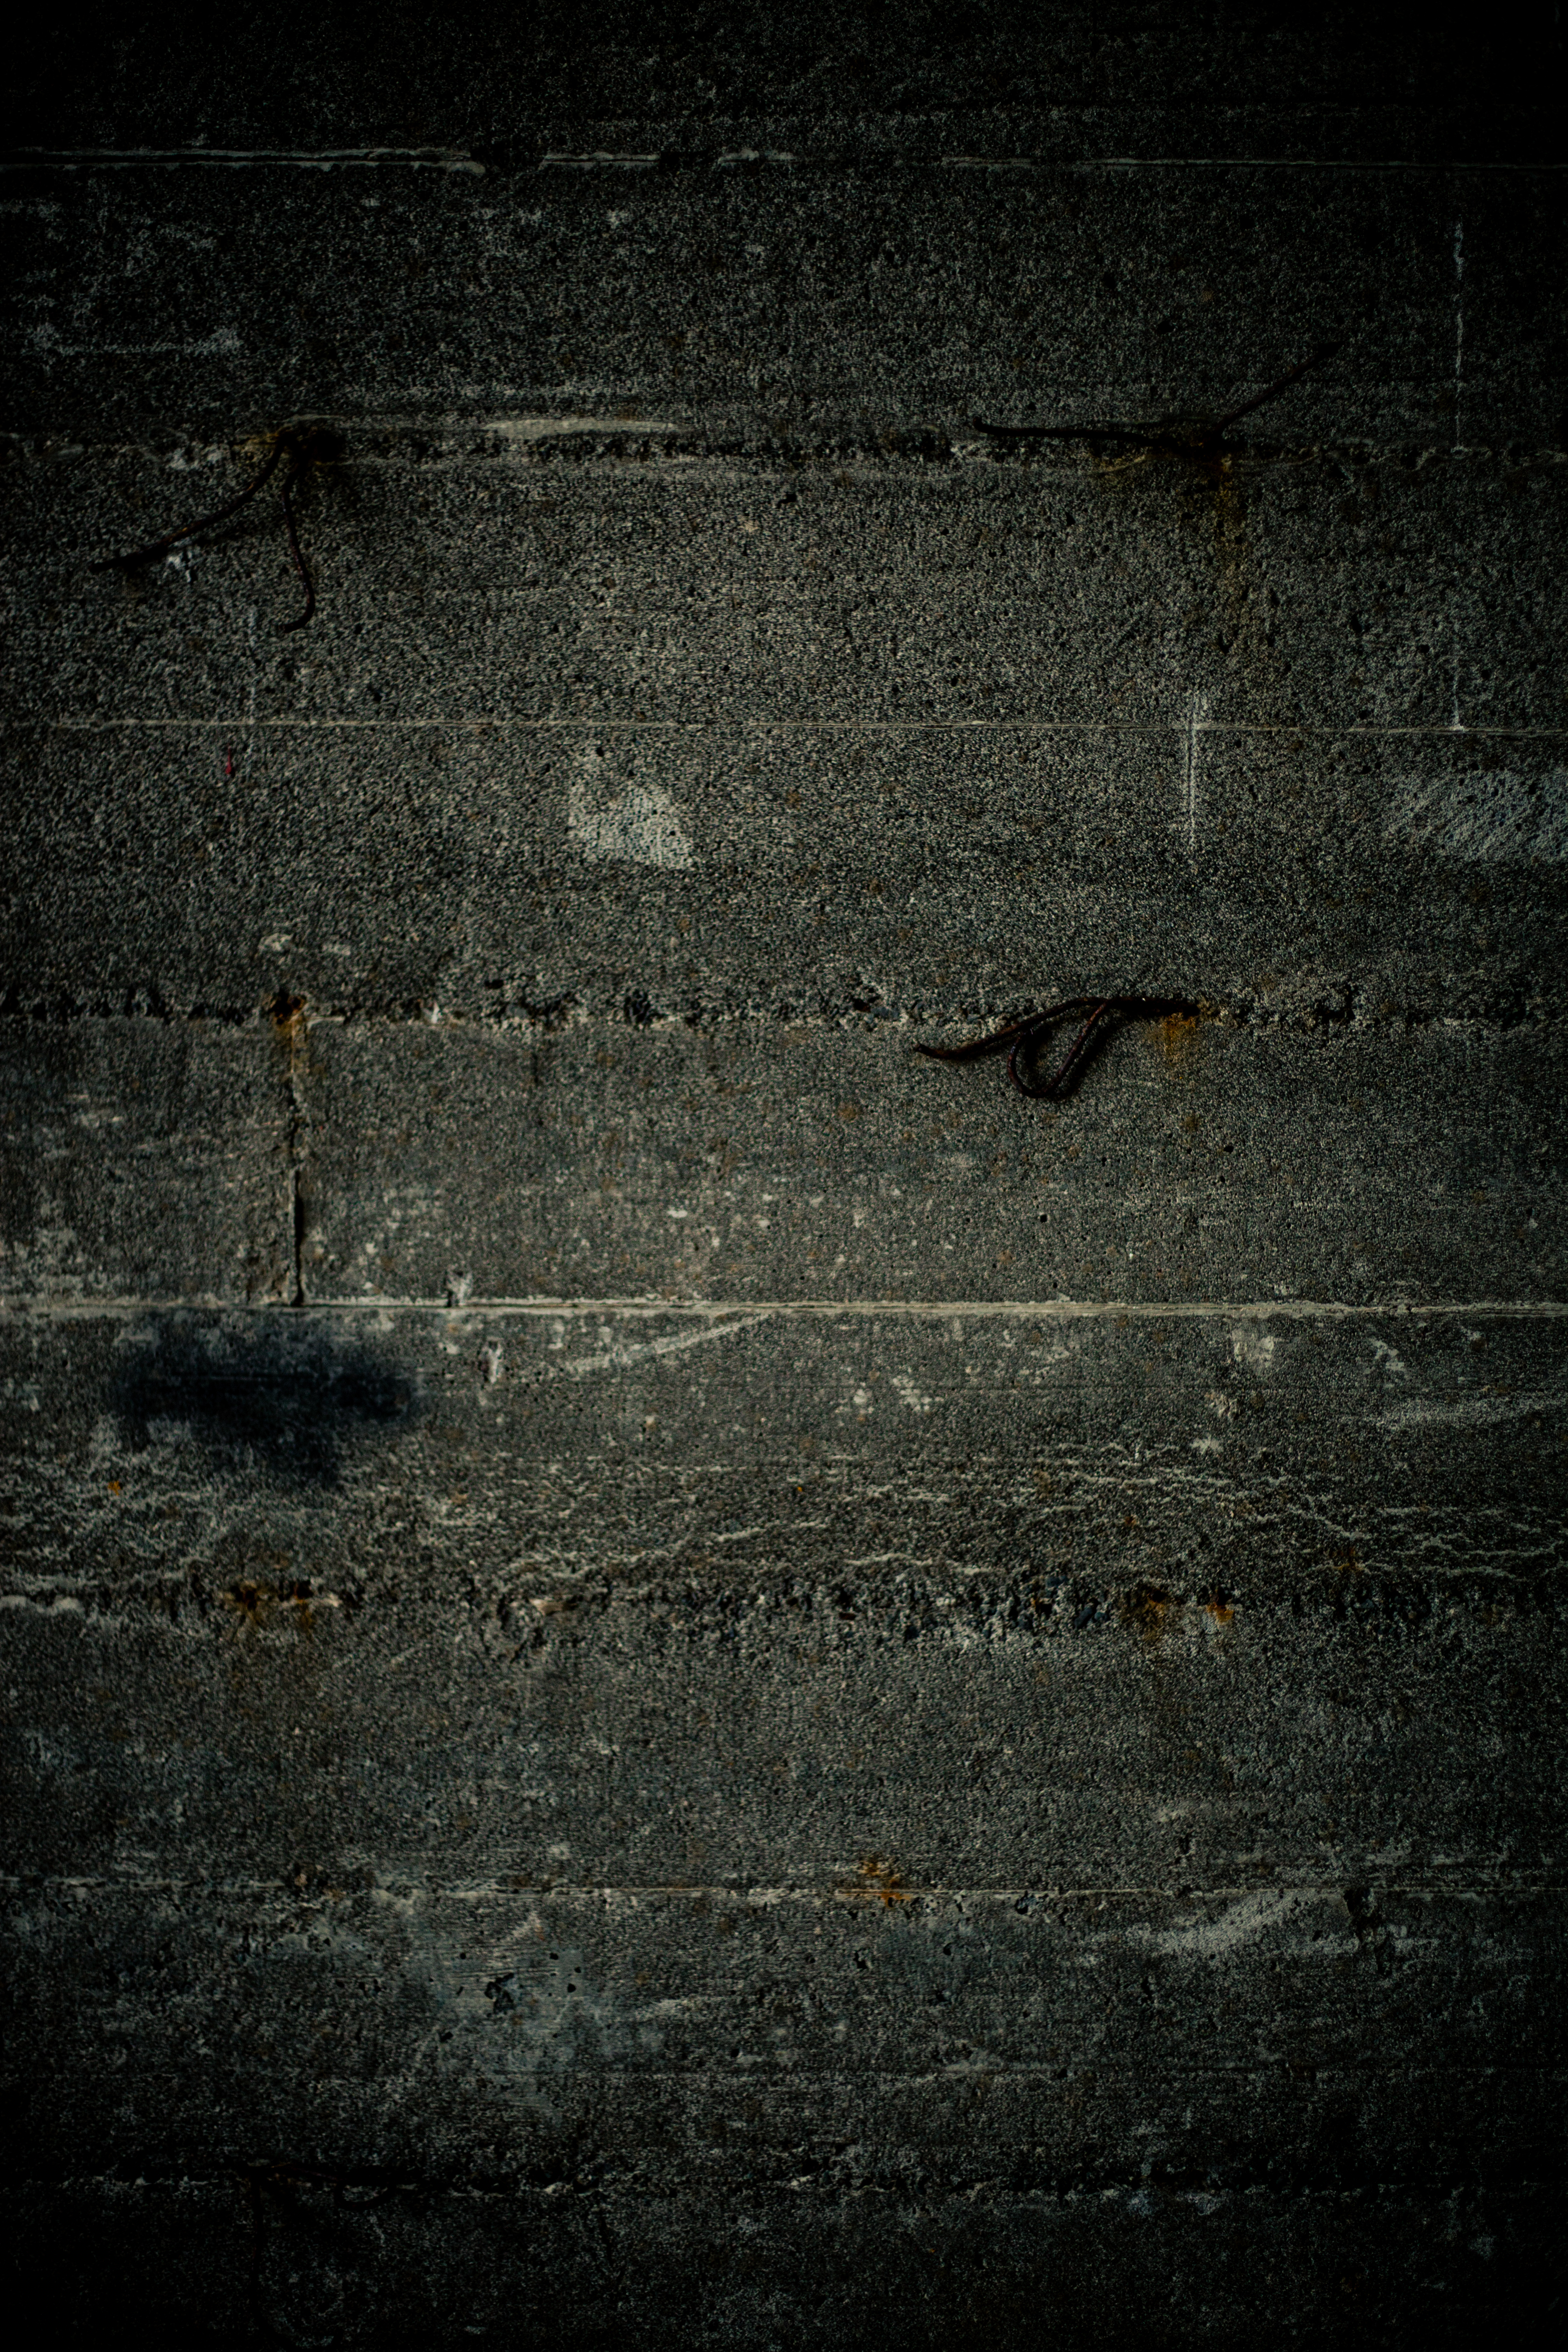 Gritty concrete texture photo